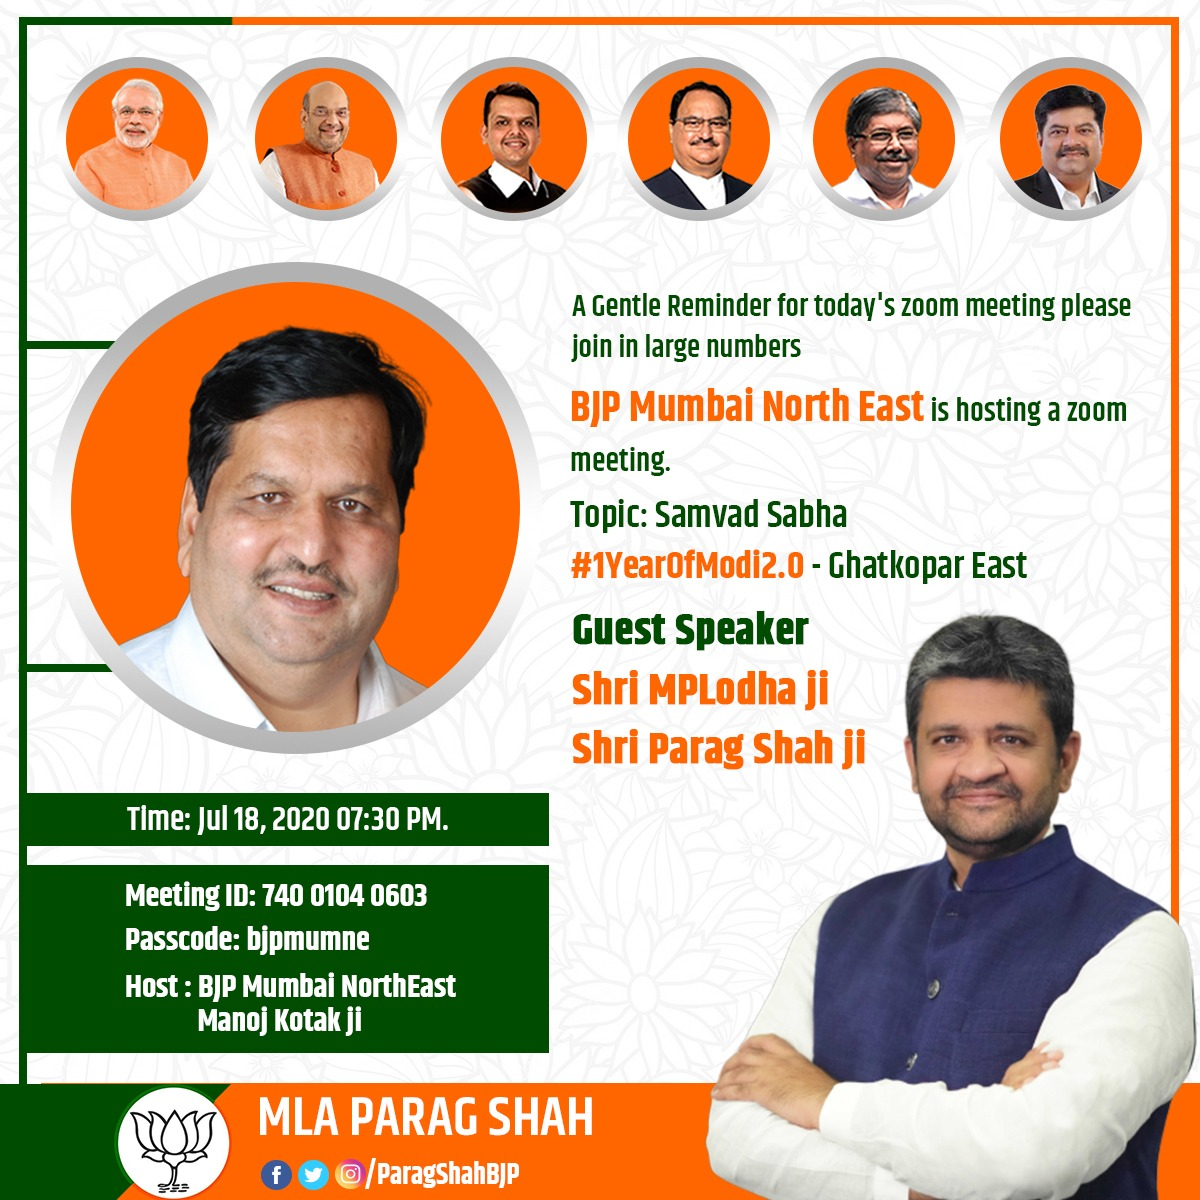 A Gentle Reminder for today's zoom meeting please join in large numbers

BJP Mumbai North East is hosting a zoom meeting.

Topic: Samvad Sabha #1YearOfModi2.0 - Ghatkopar East. 

Meeting ID: 740 0104 0603

Passcode: bjpmumne